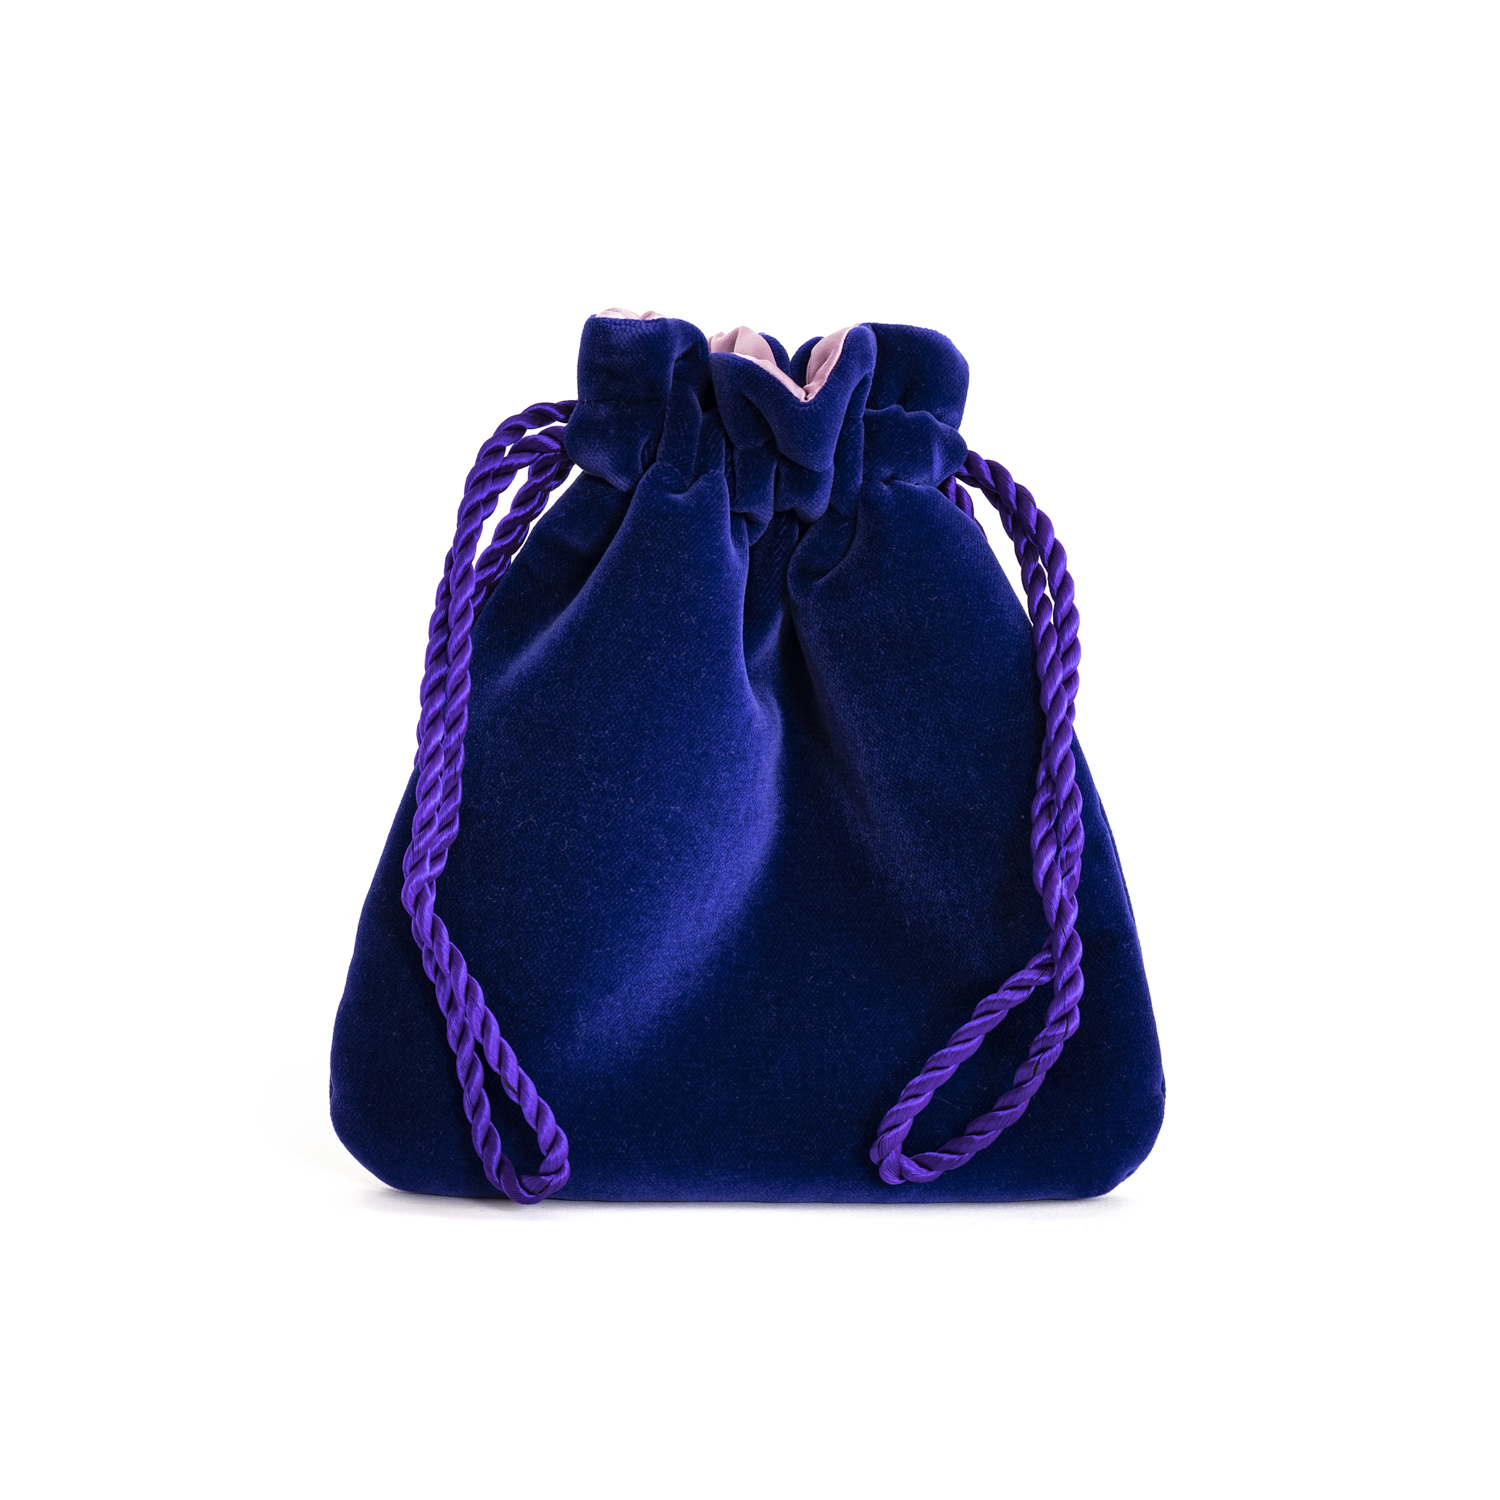 Purple Velvet - Scilla e Cariddi Bags